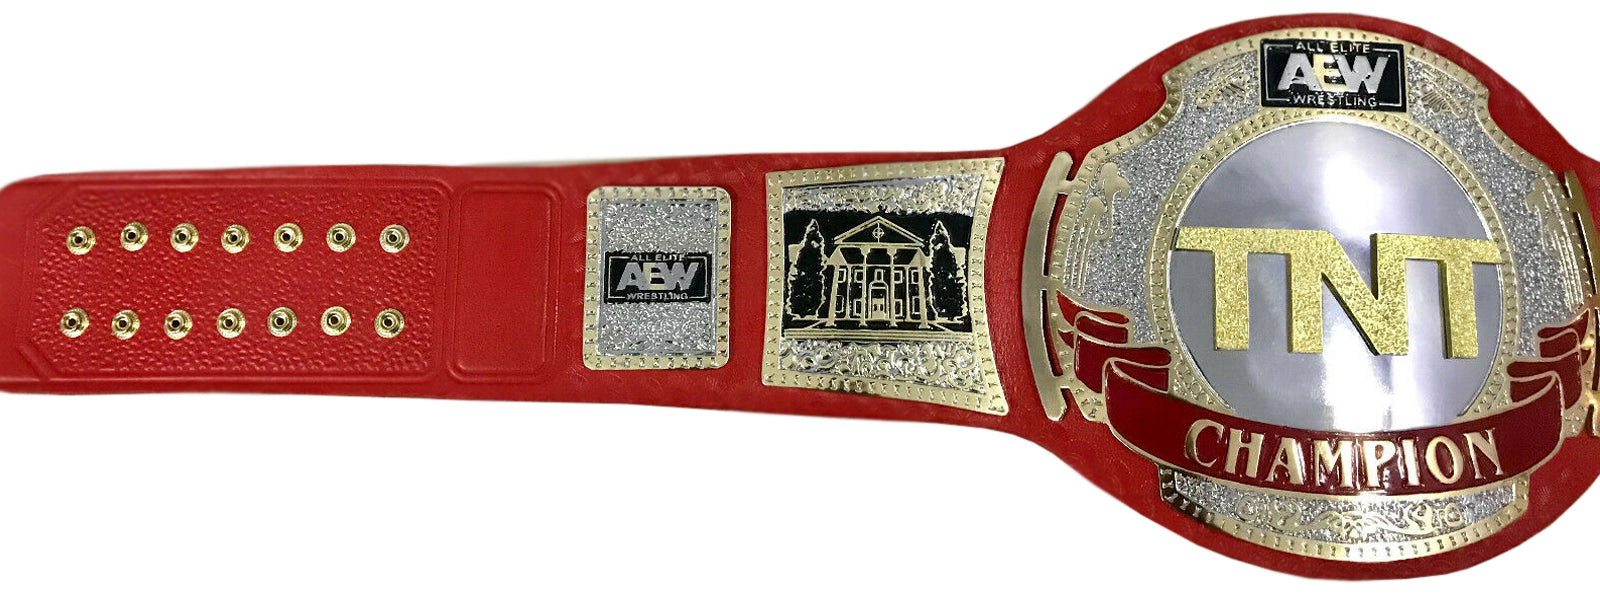 AEW TNT Wrestling Championship Red Title Heavy Weight Belt